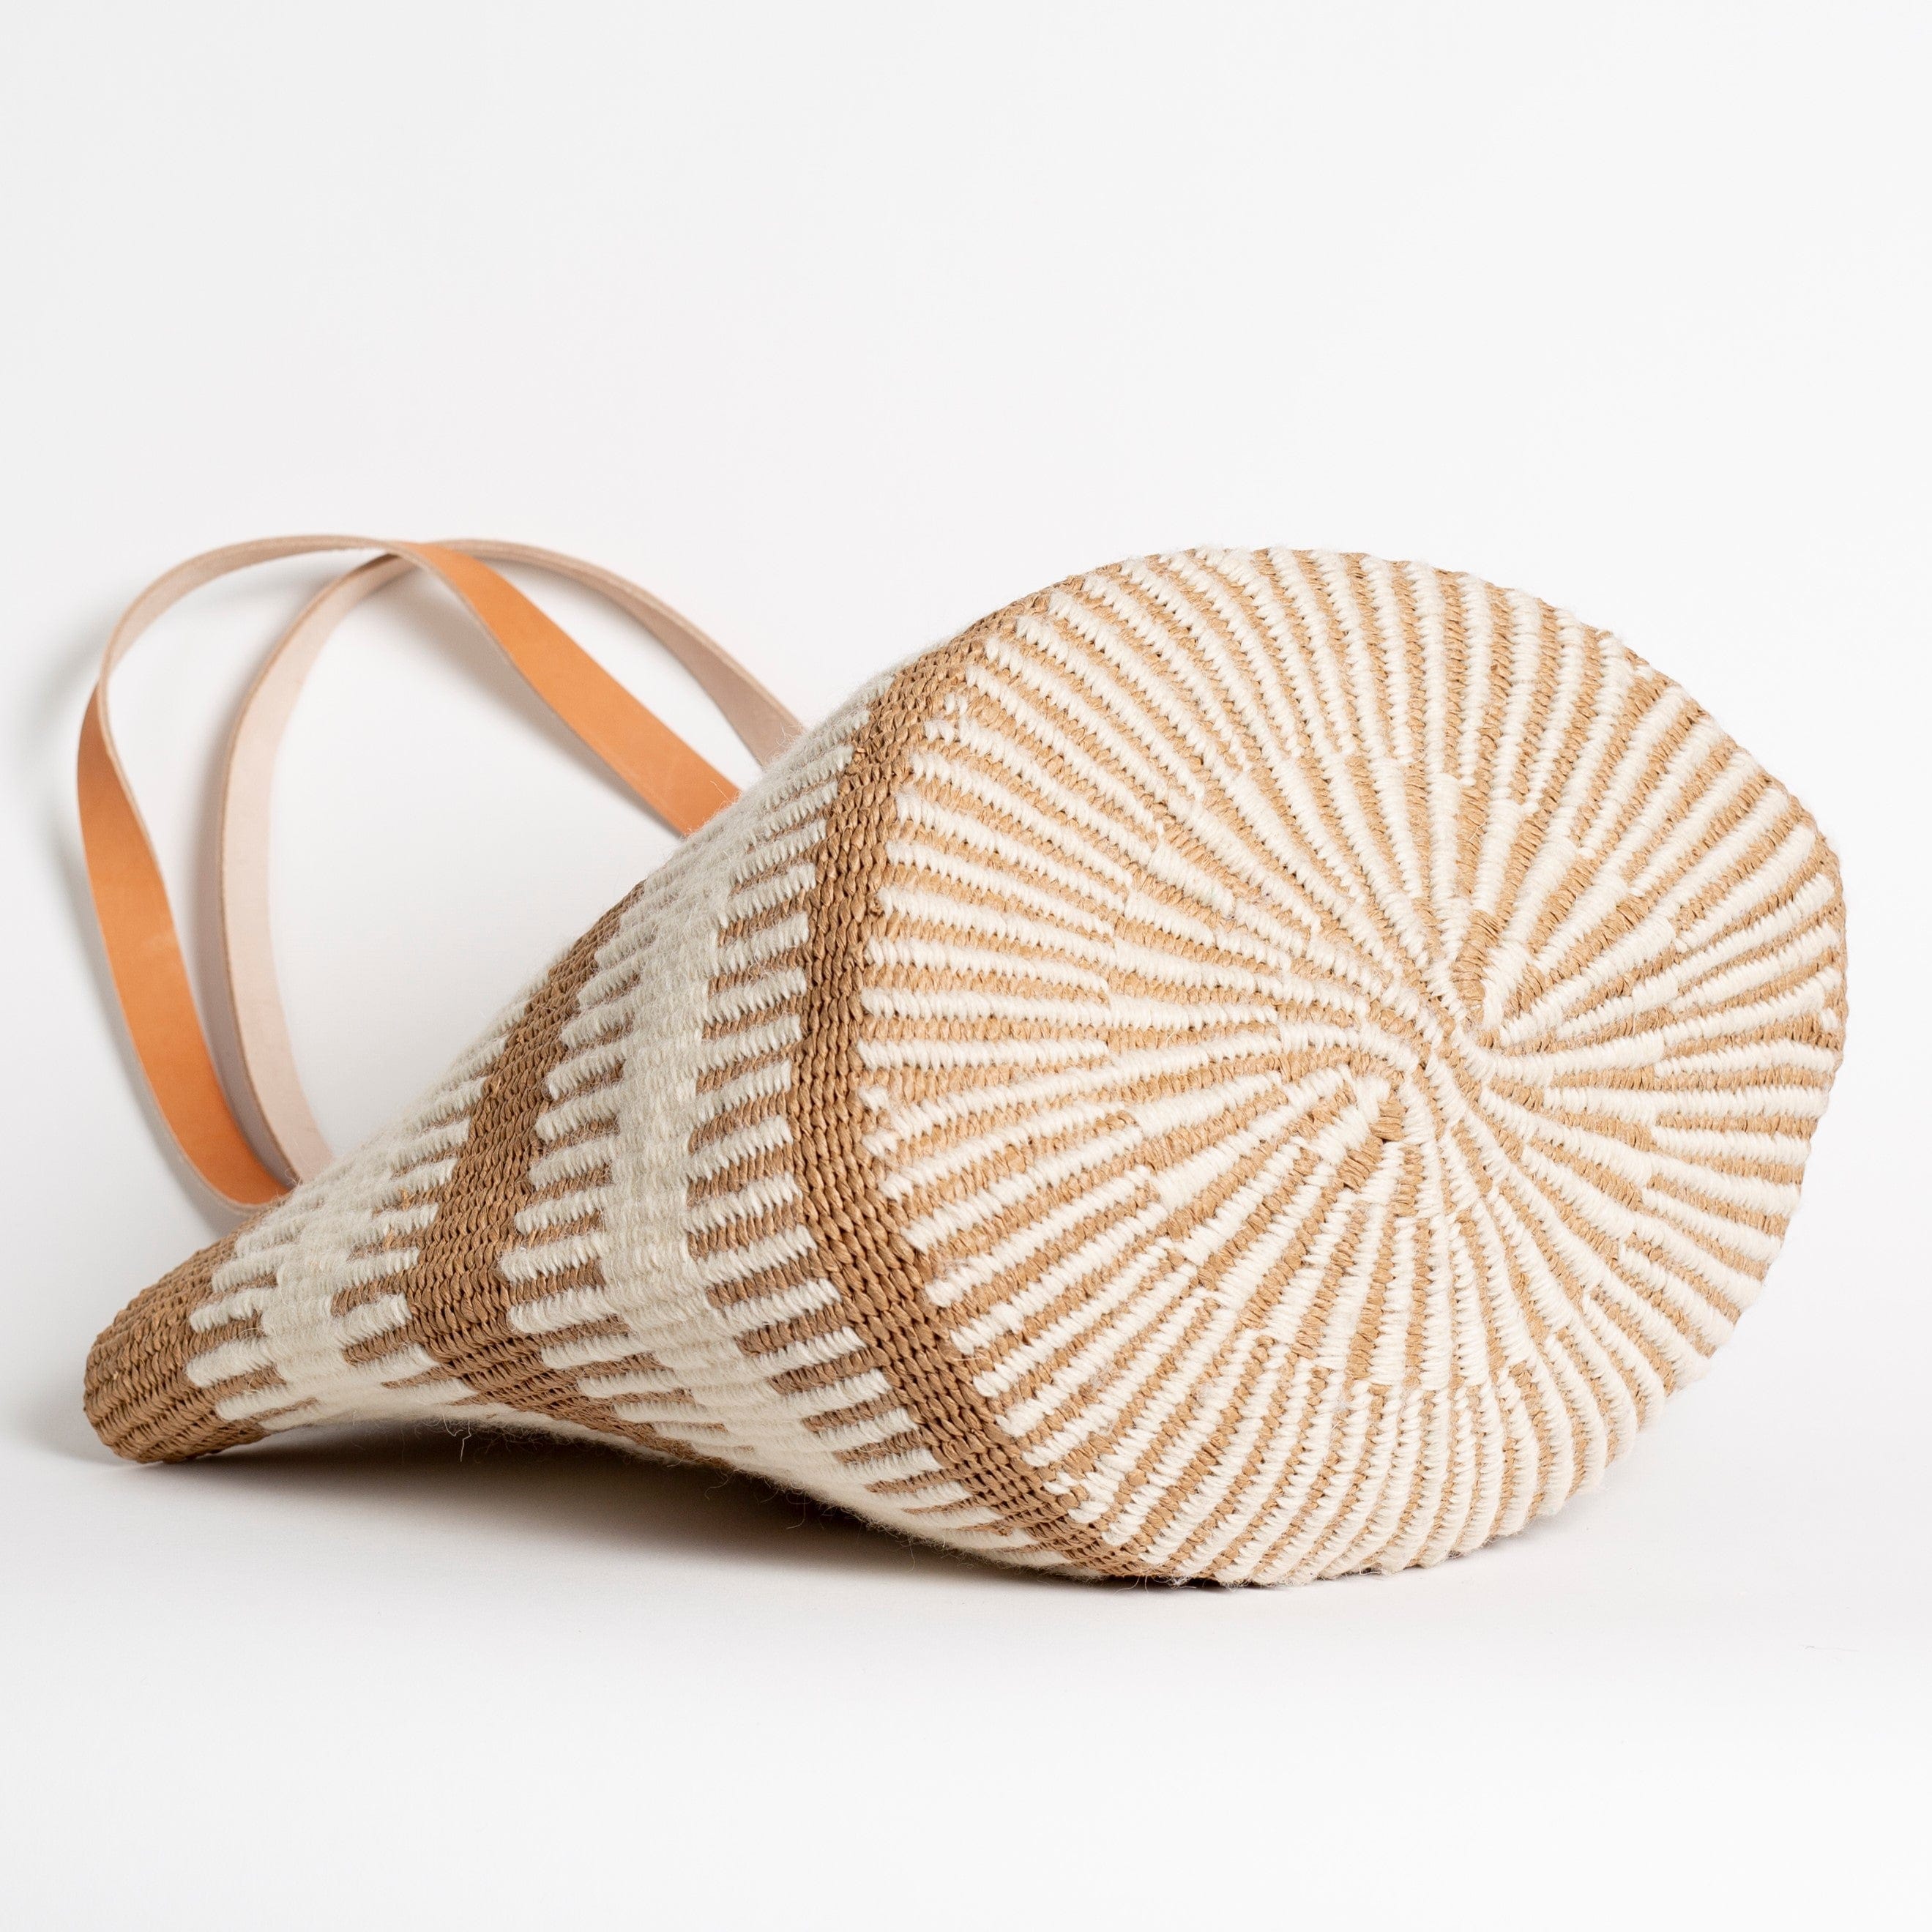 Mifuko Wool and paper Shopper basket Pamba shopper basket | White rib weave M